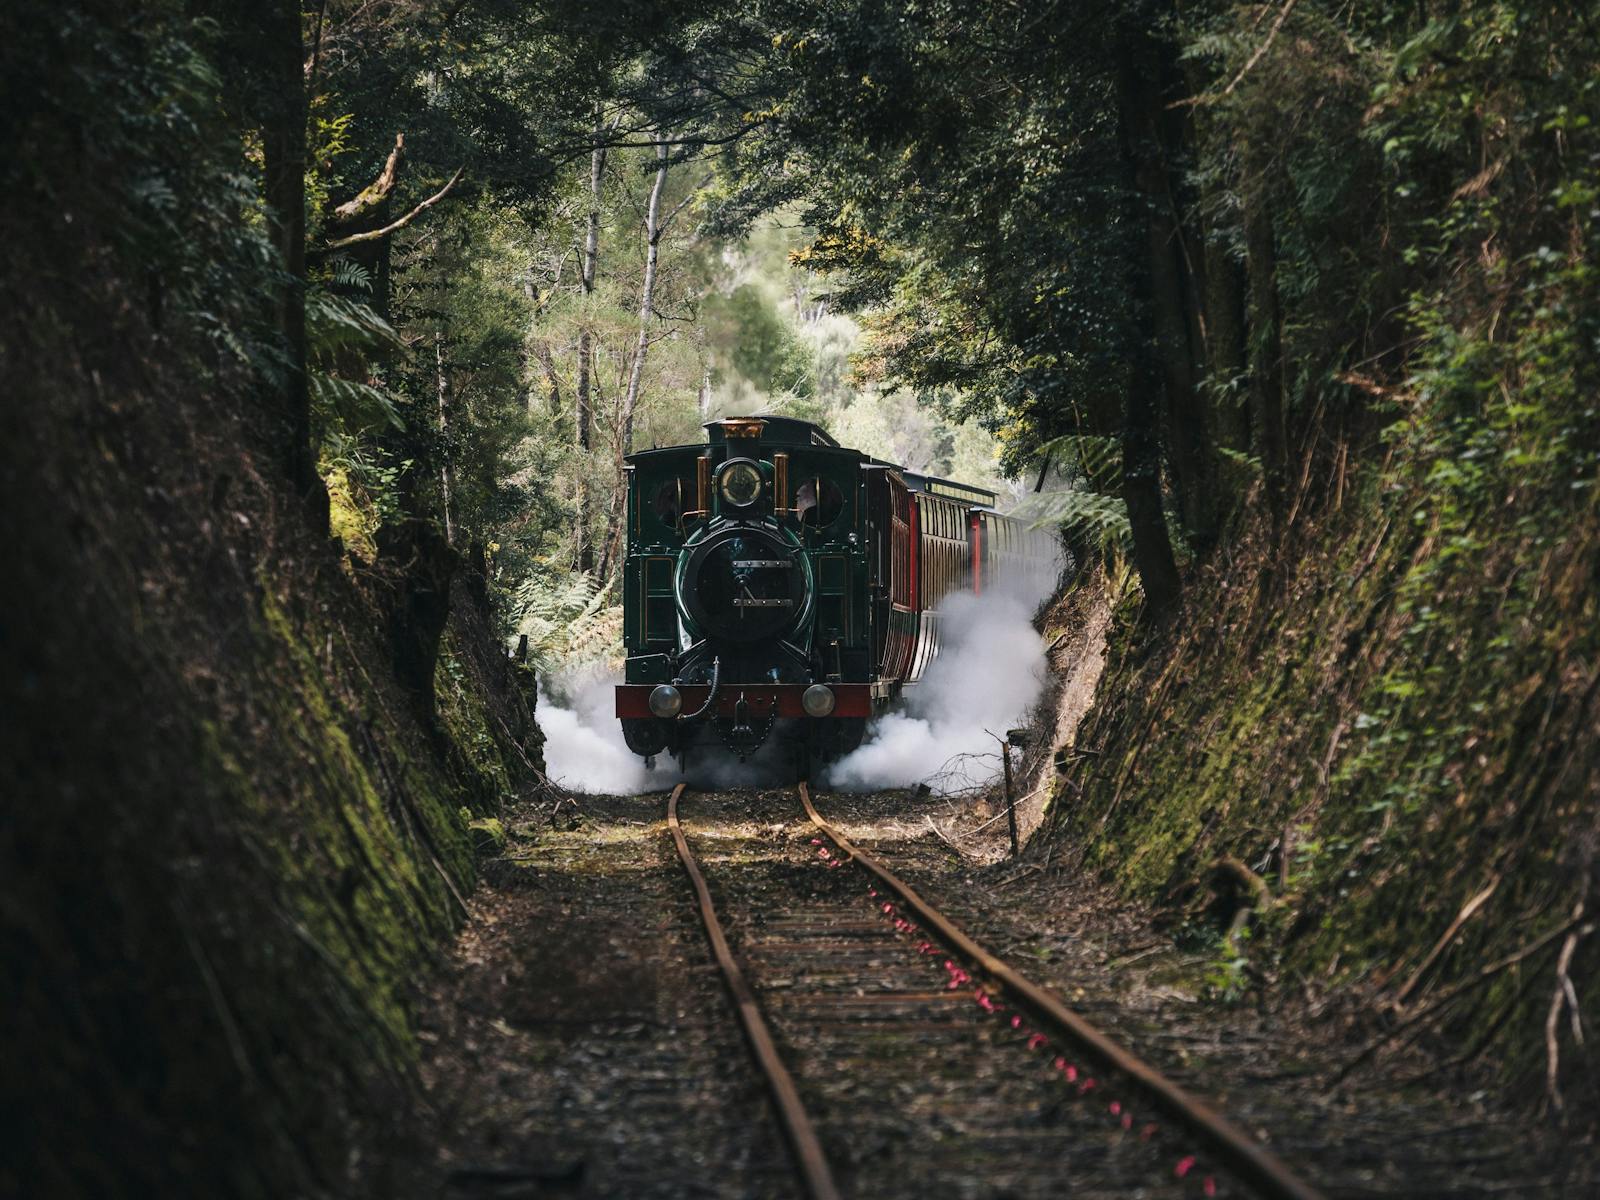 Train image